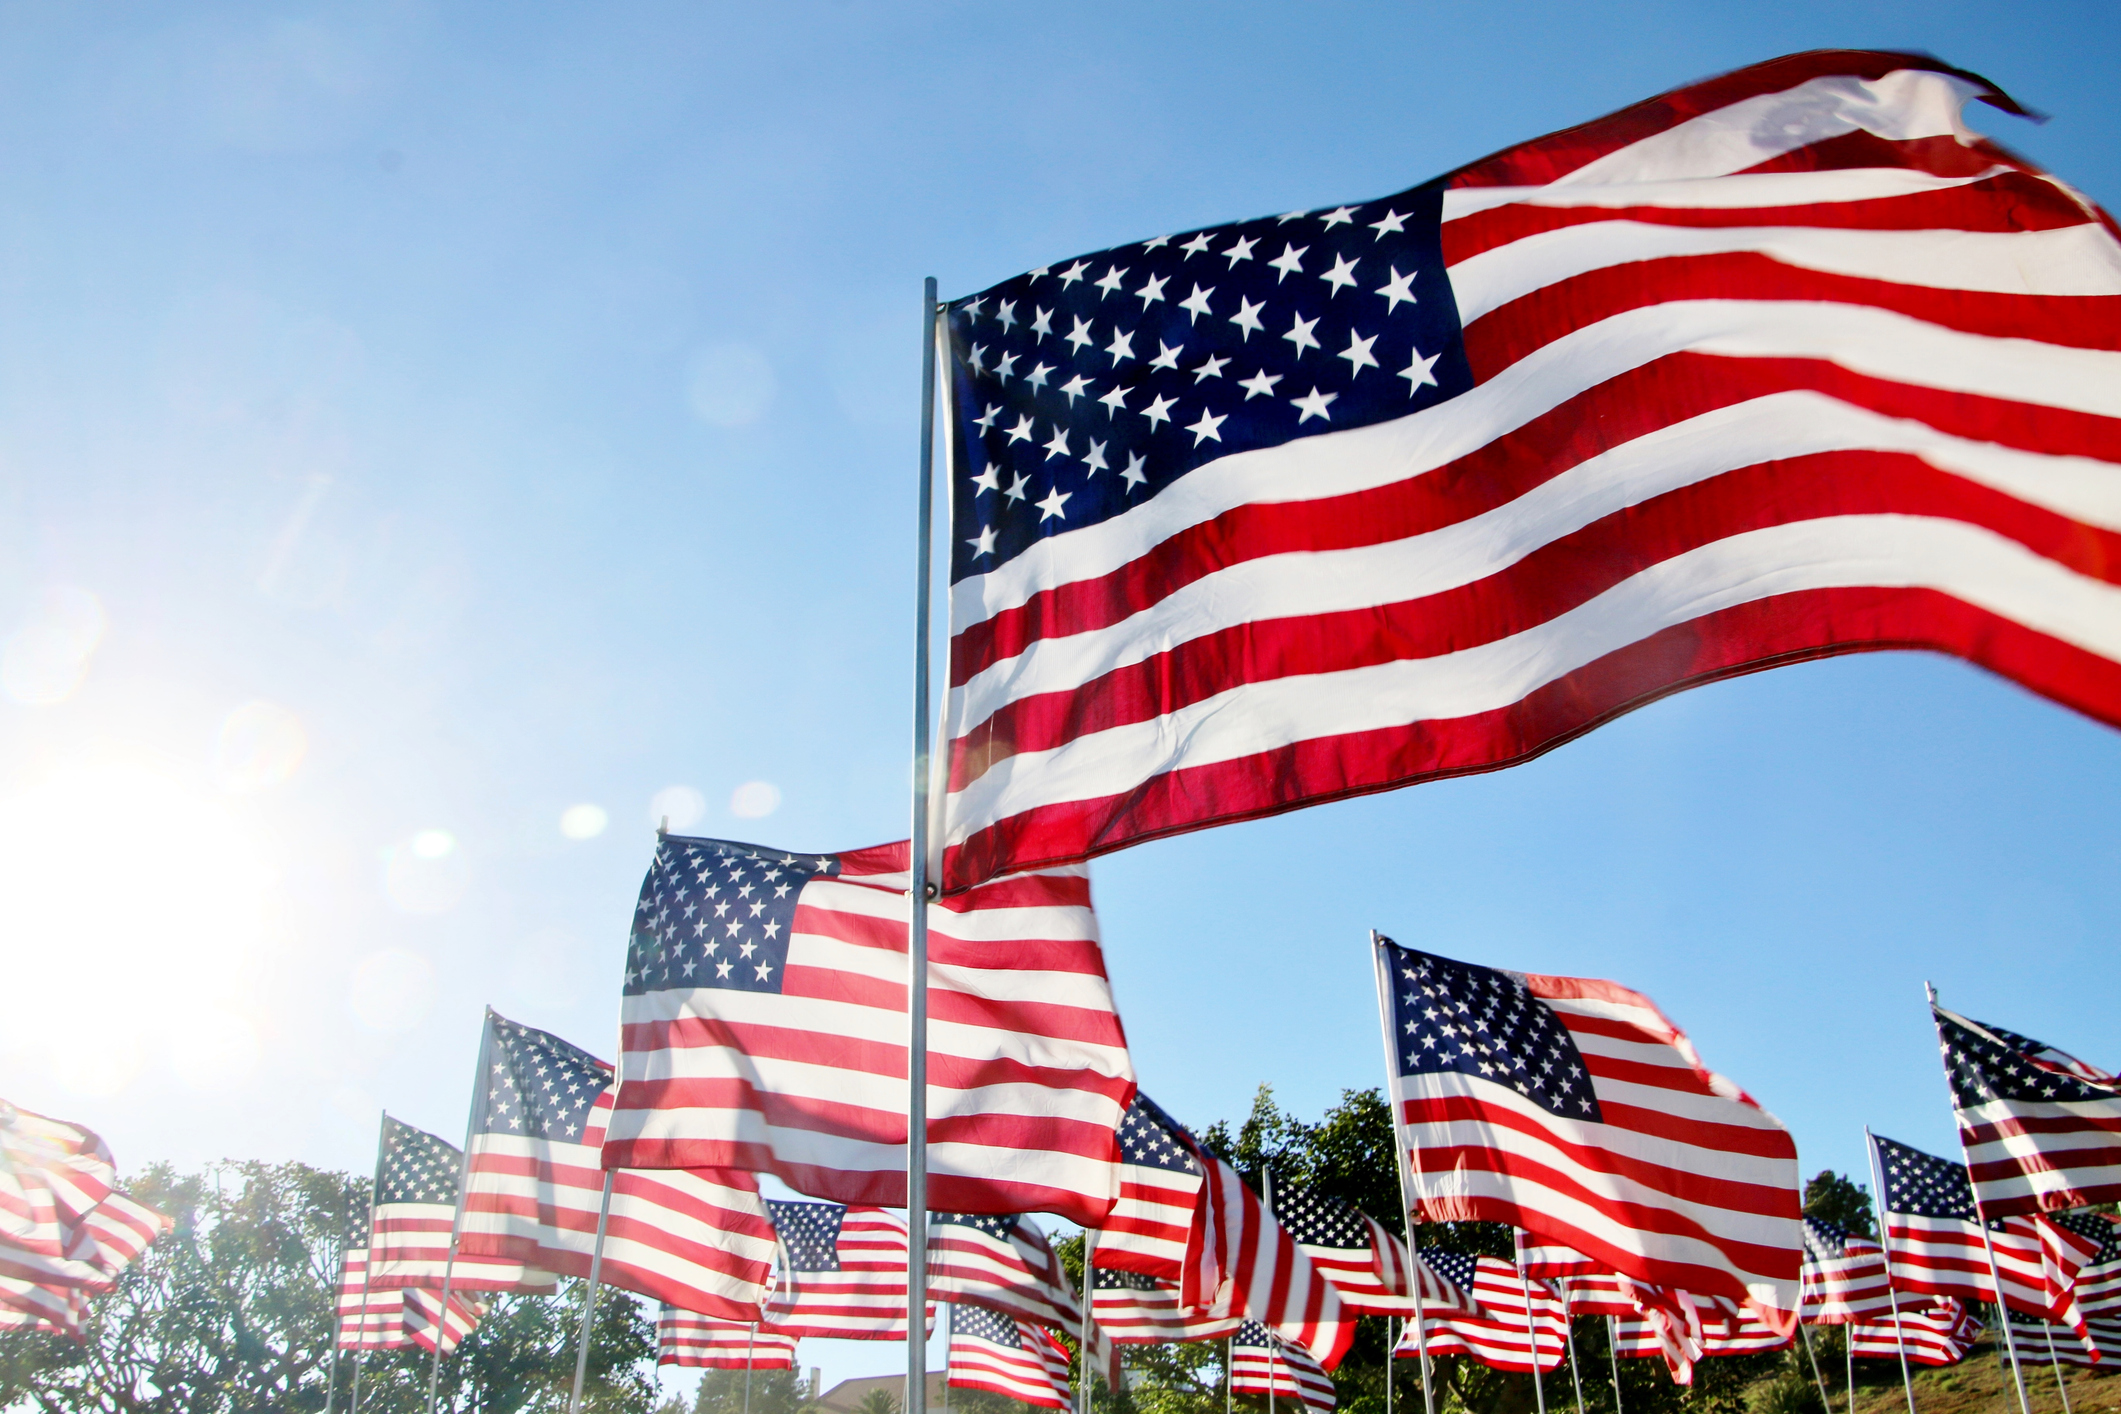 Quốc kỳ Hoa Kỳ tung bay theo gió ở Malibu, CA